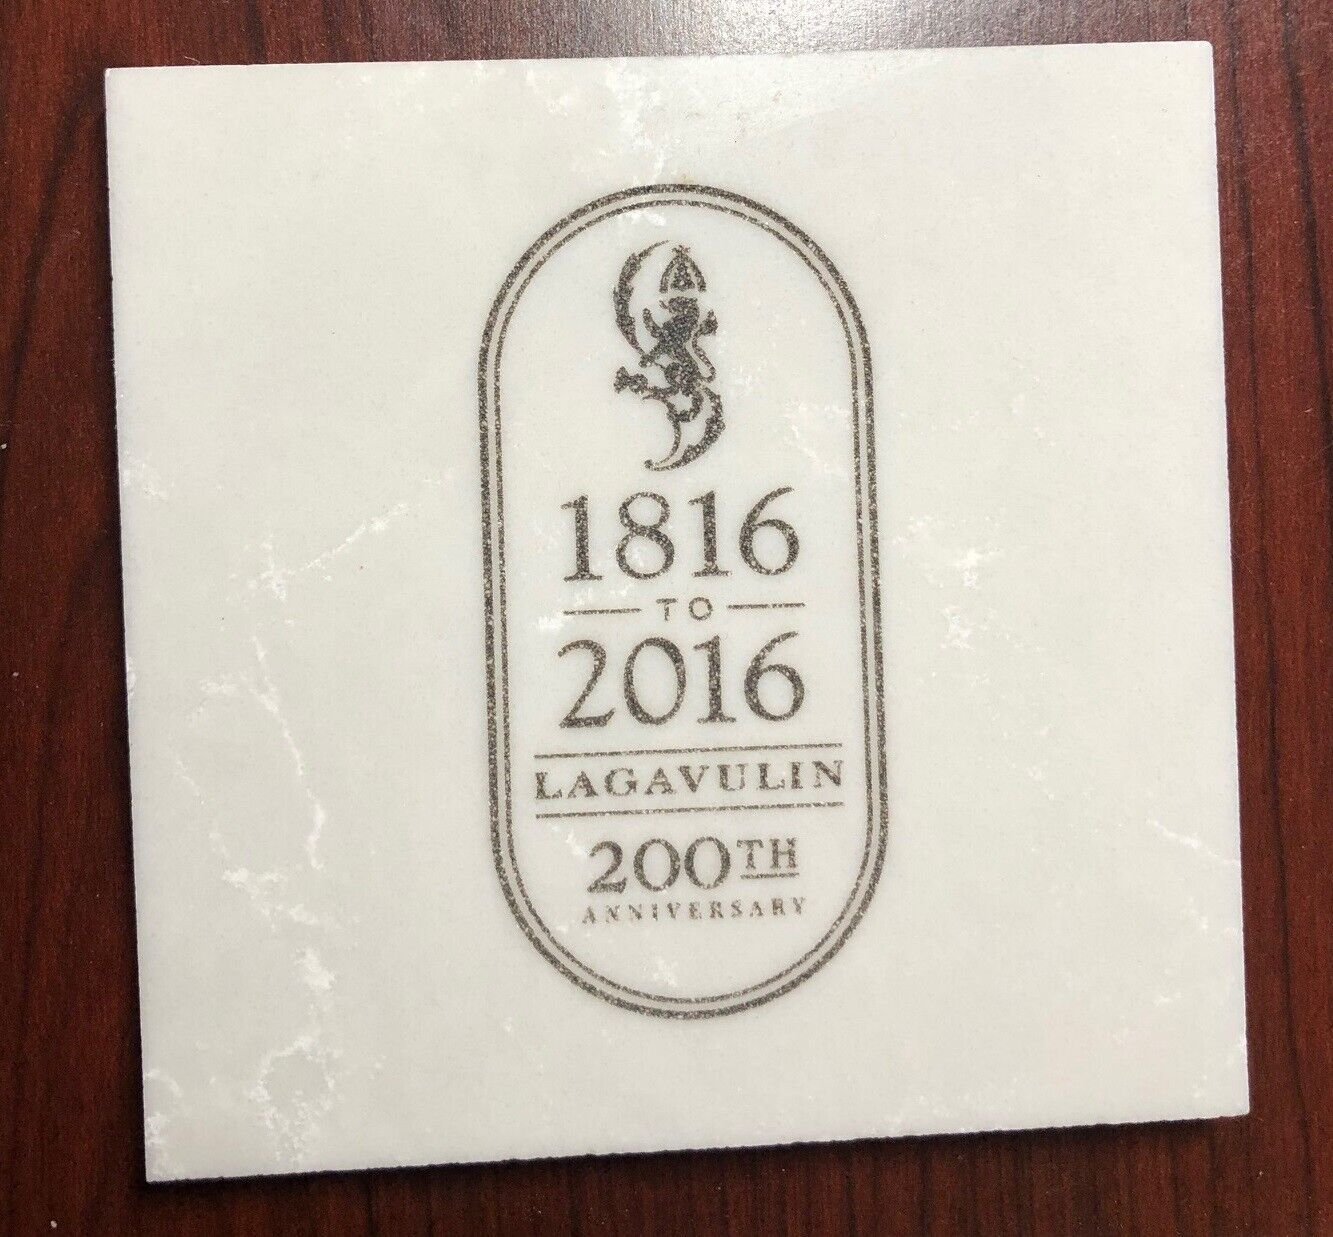 LAGAVULIN 200th Anniversary Marble Coaster